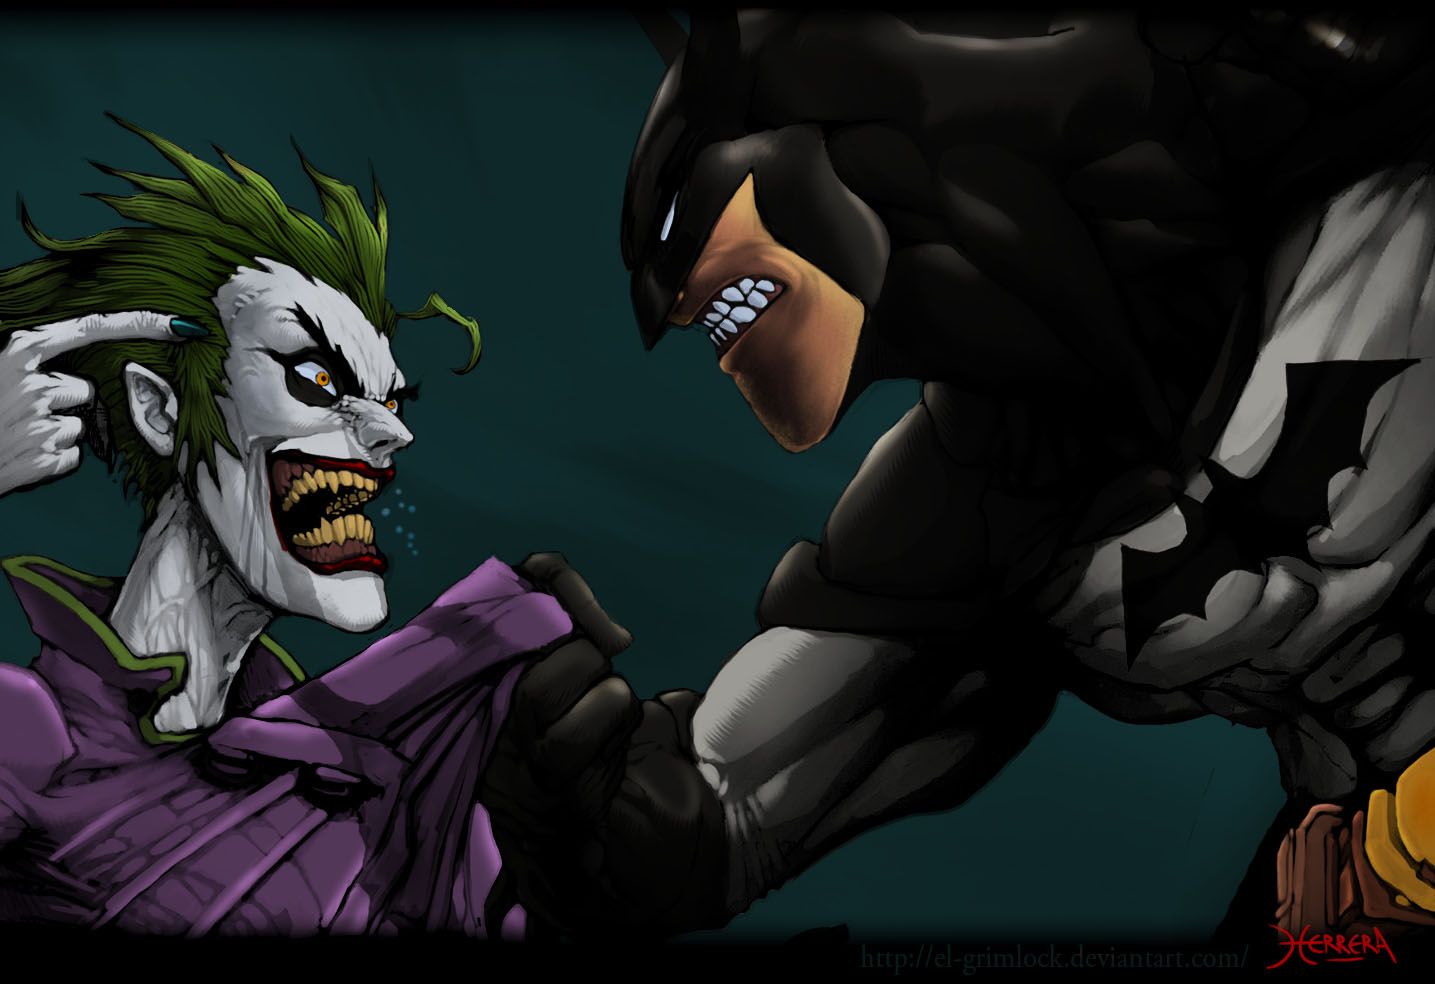 Fight Of Joker And Batman Wallpapers - Wallpaper Cave